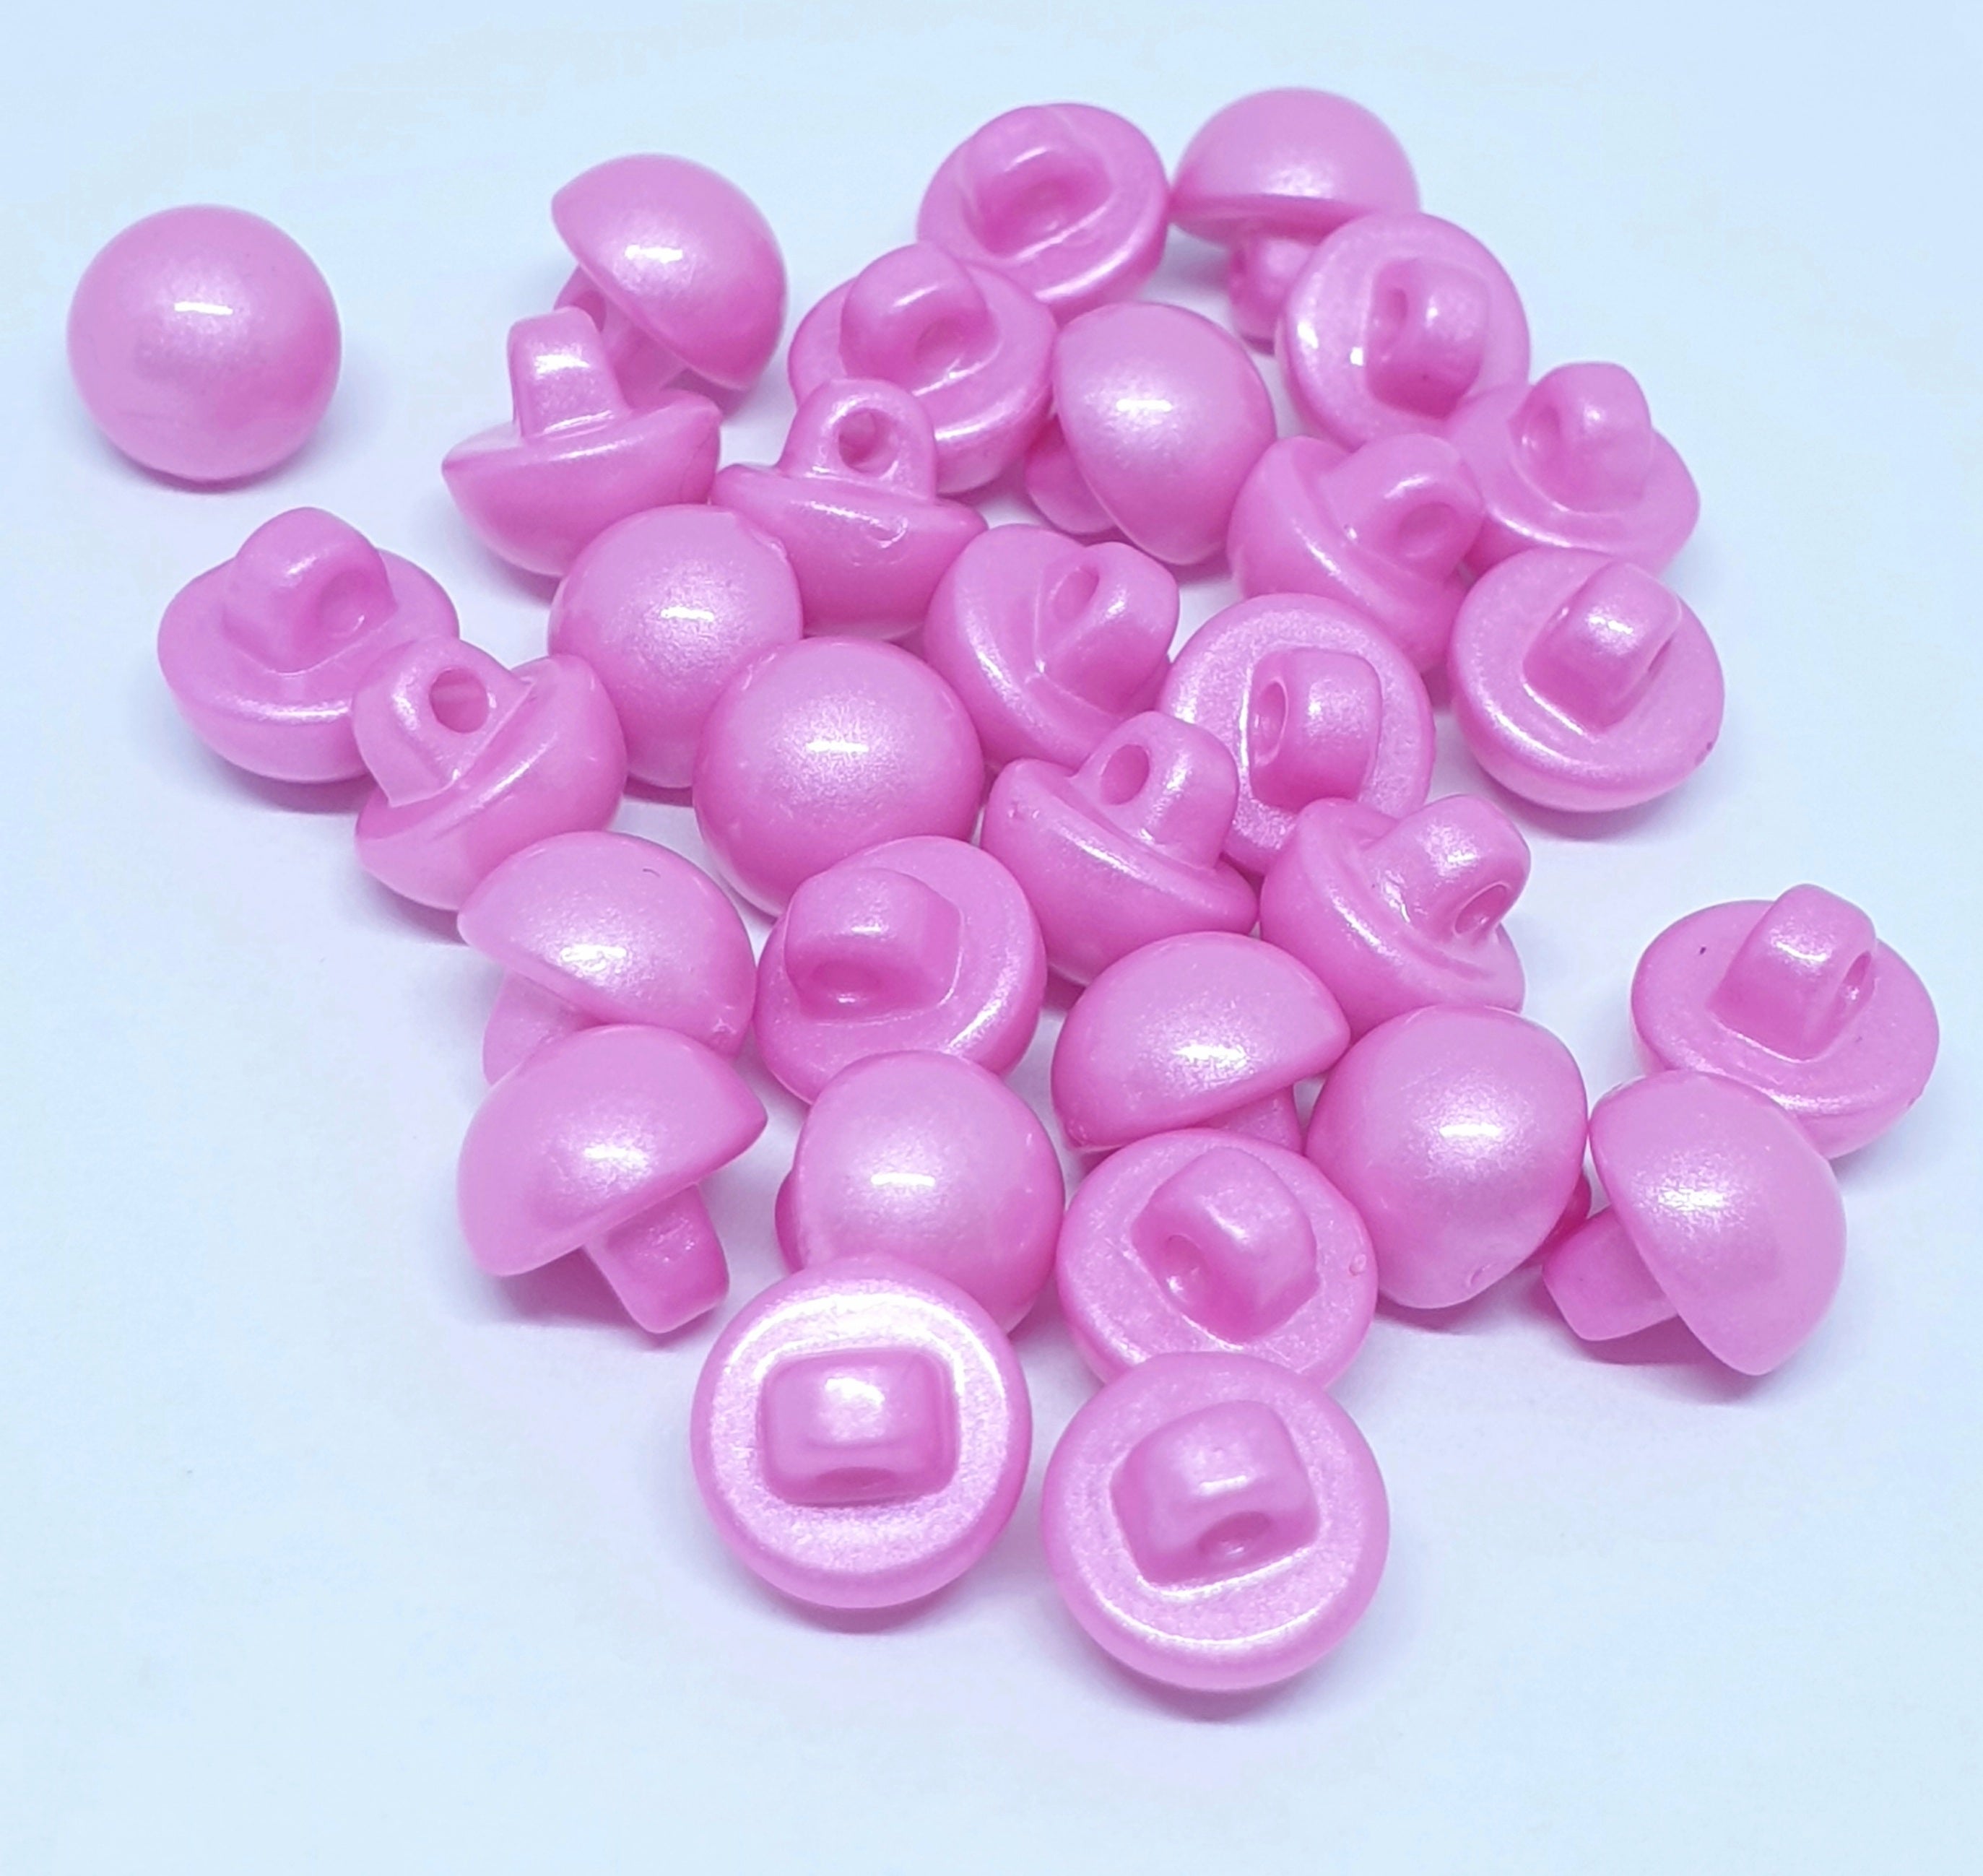 MajorCrafts 30pcs 8mm Light Rose Pink High-Grade Acrylic Small Round Sewing Mushroom Shank Buttons